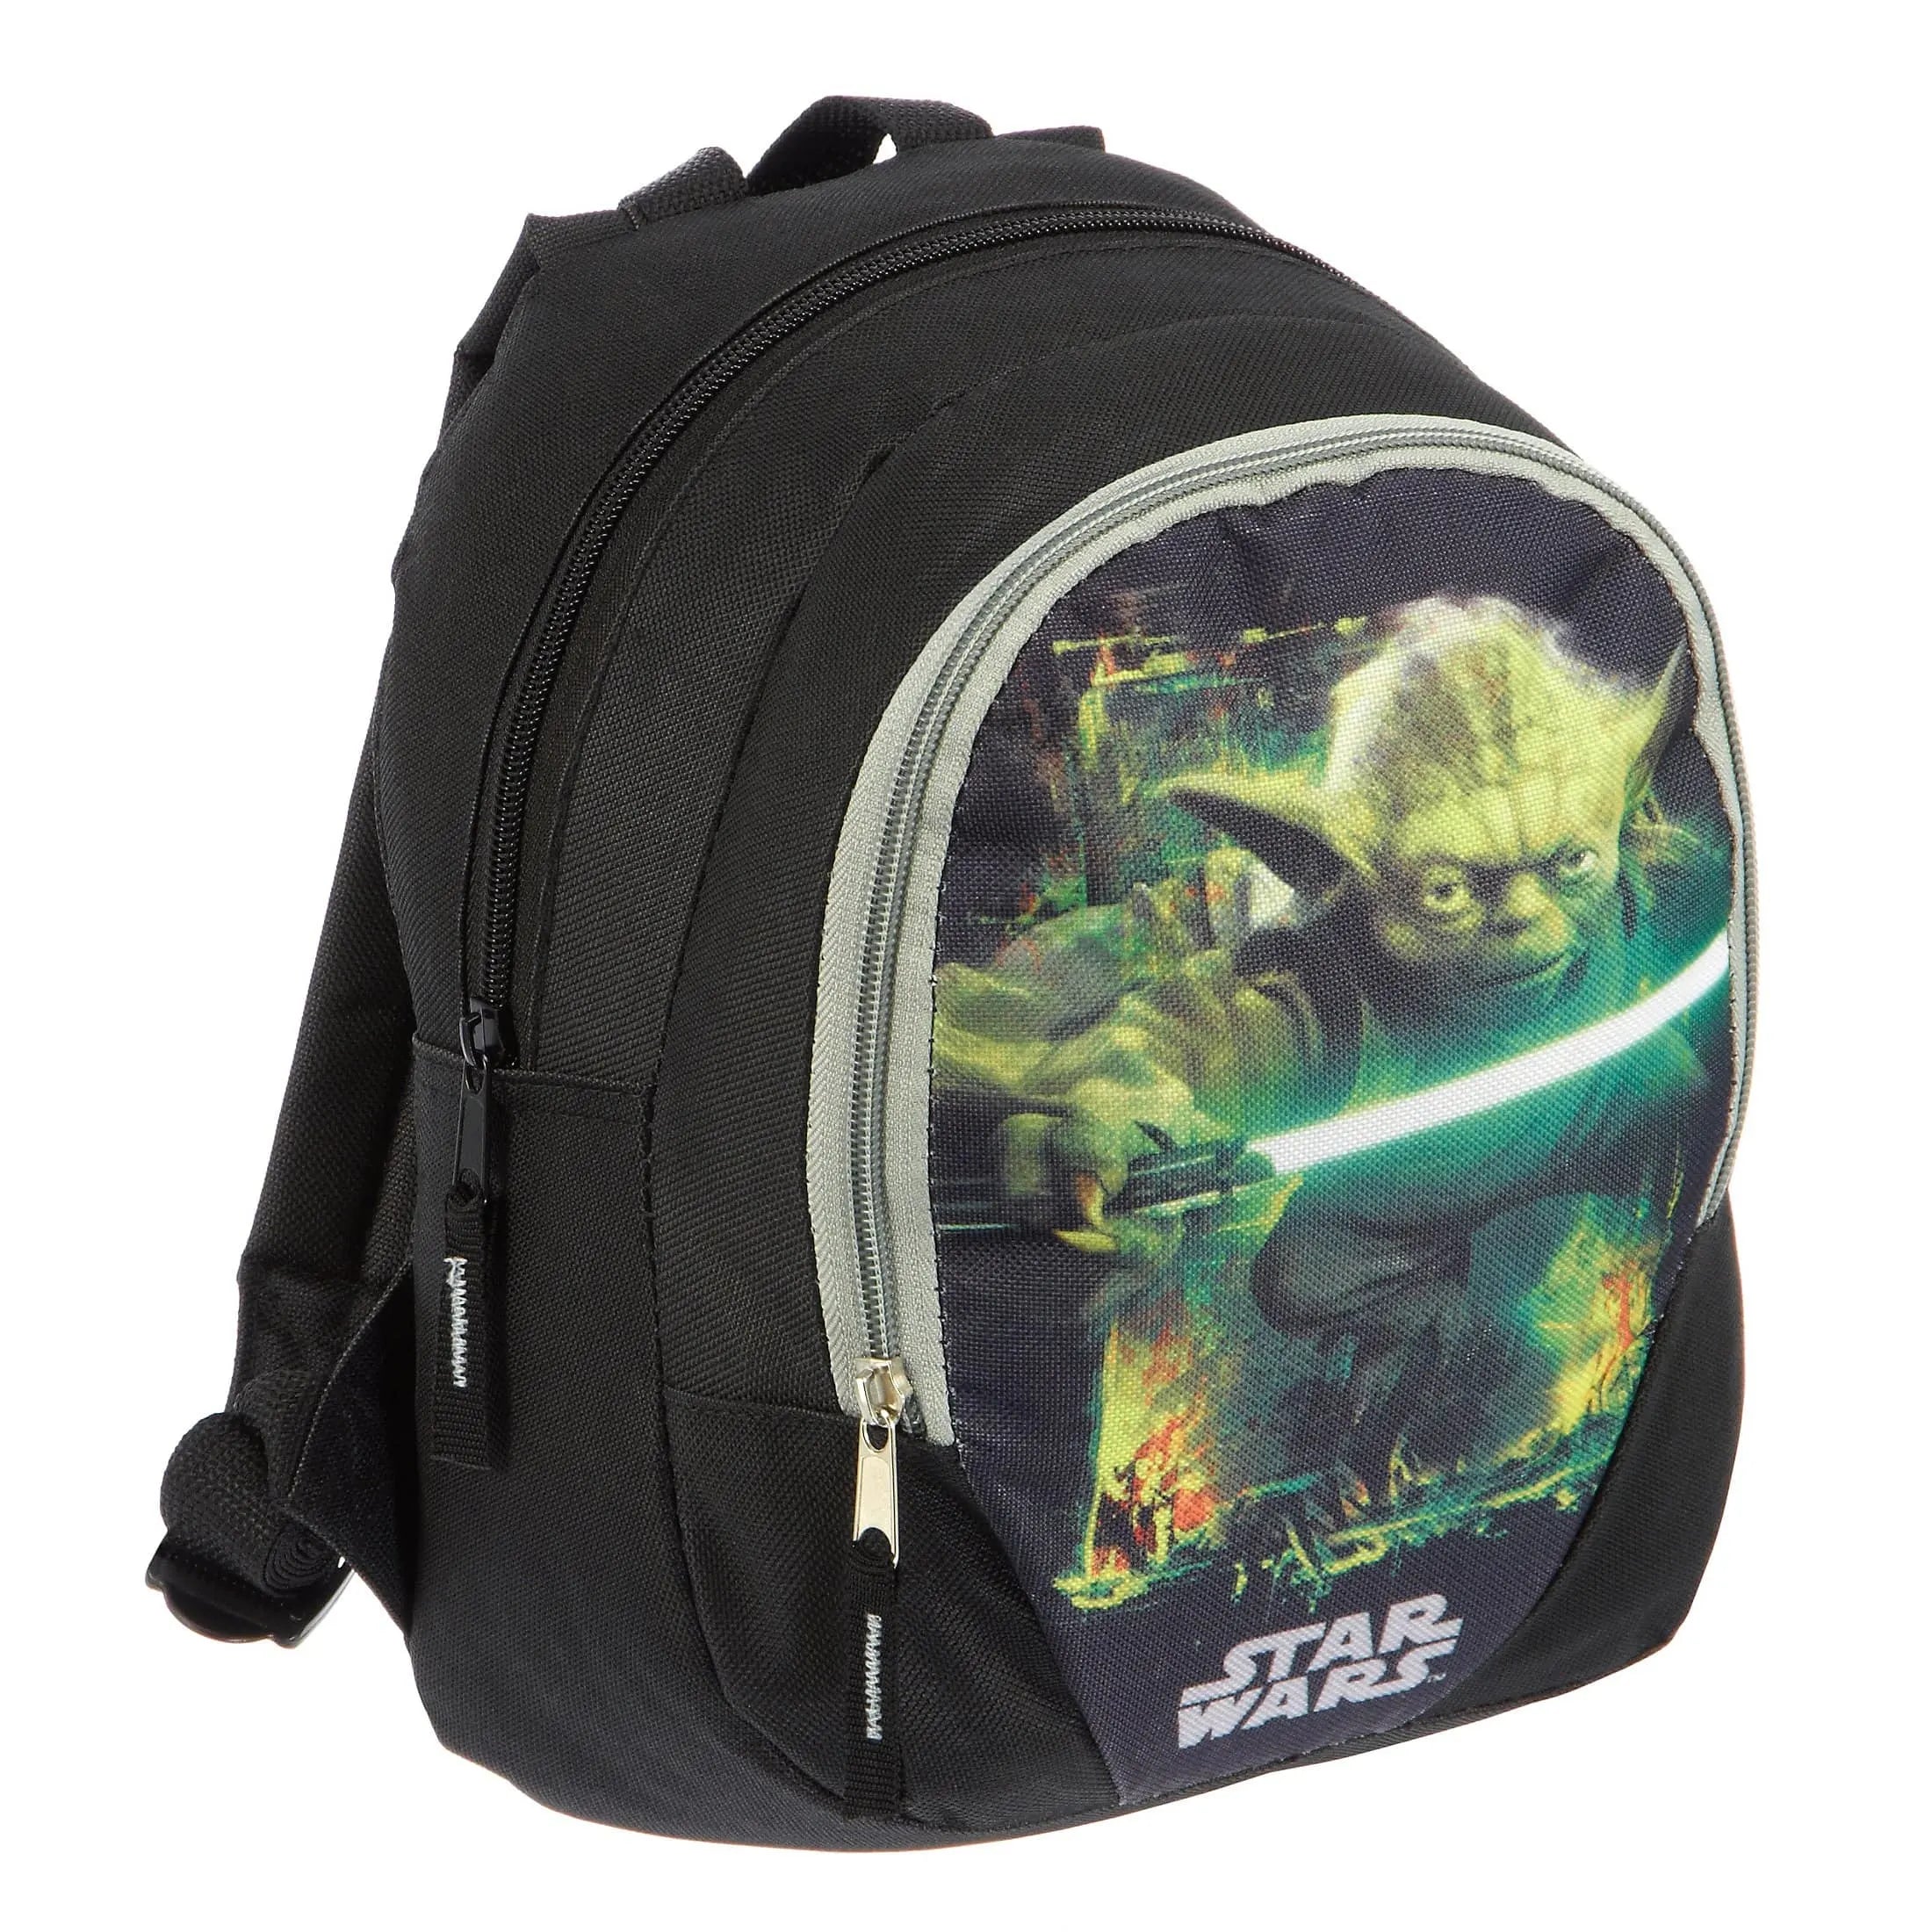 Fabrizio Starwars children's backpack 28 cm - Yoda